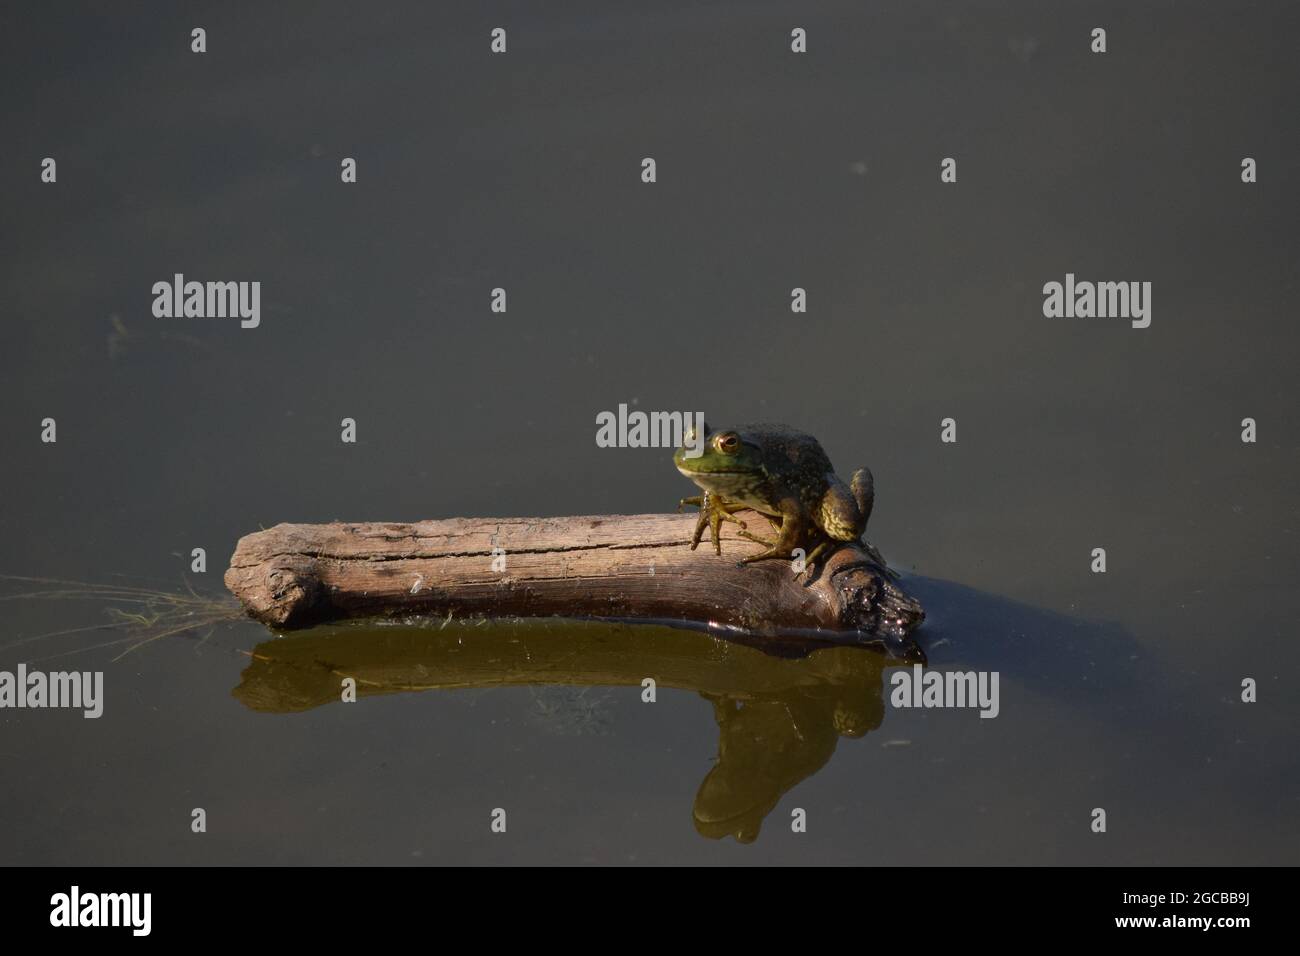 American Bullfrog sitting on branch in Pond Stock Photo